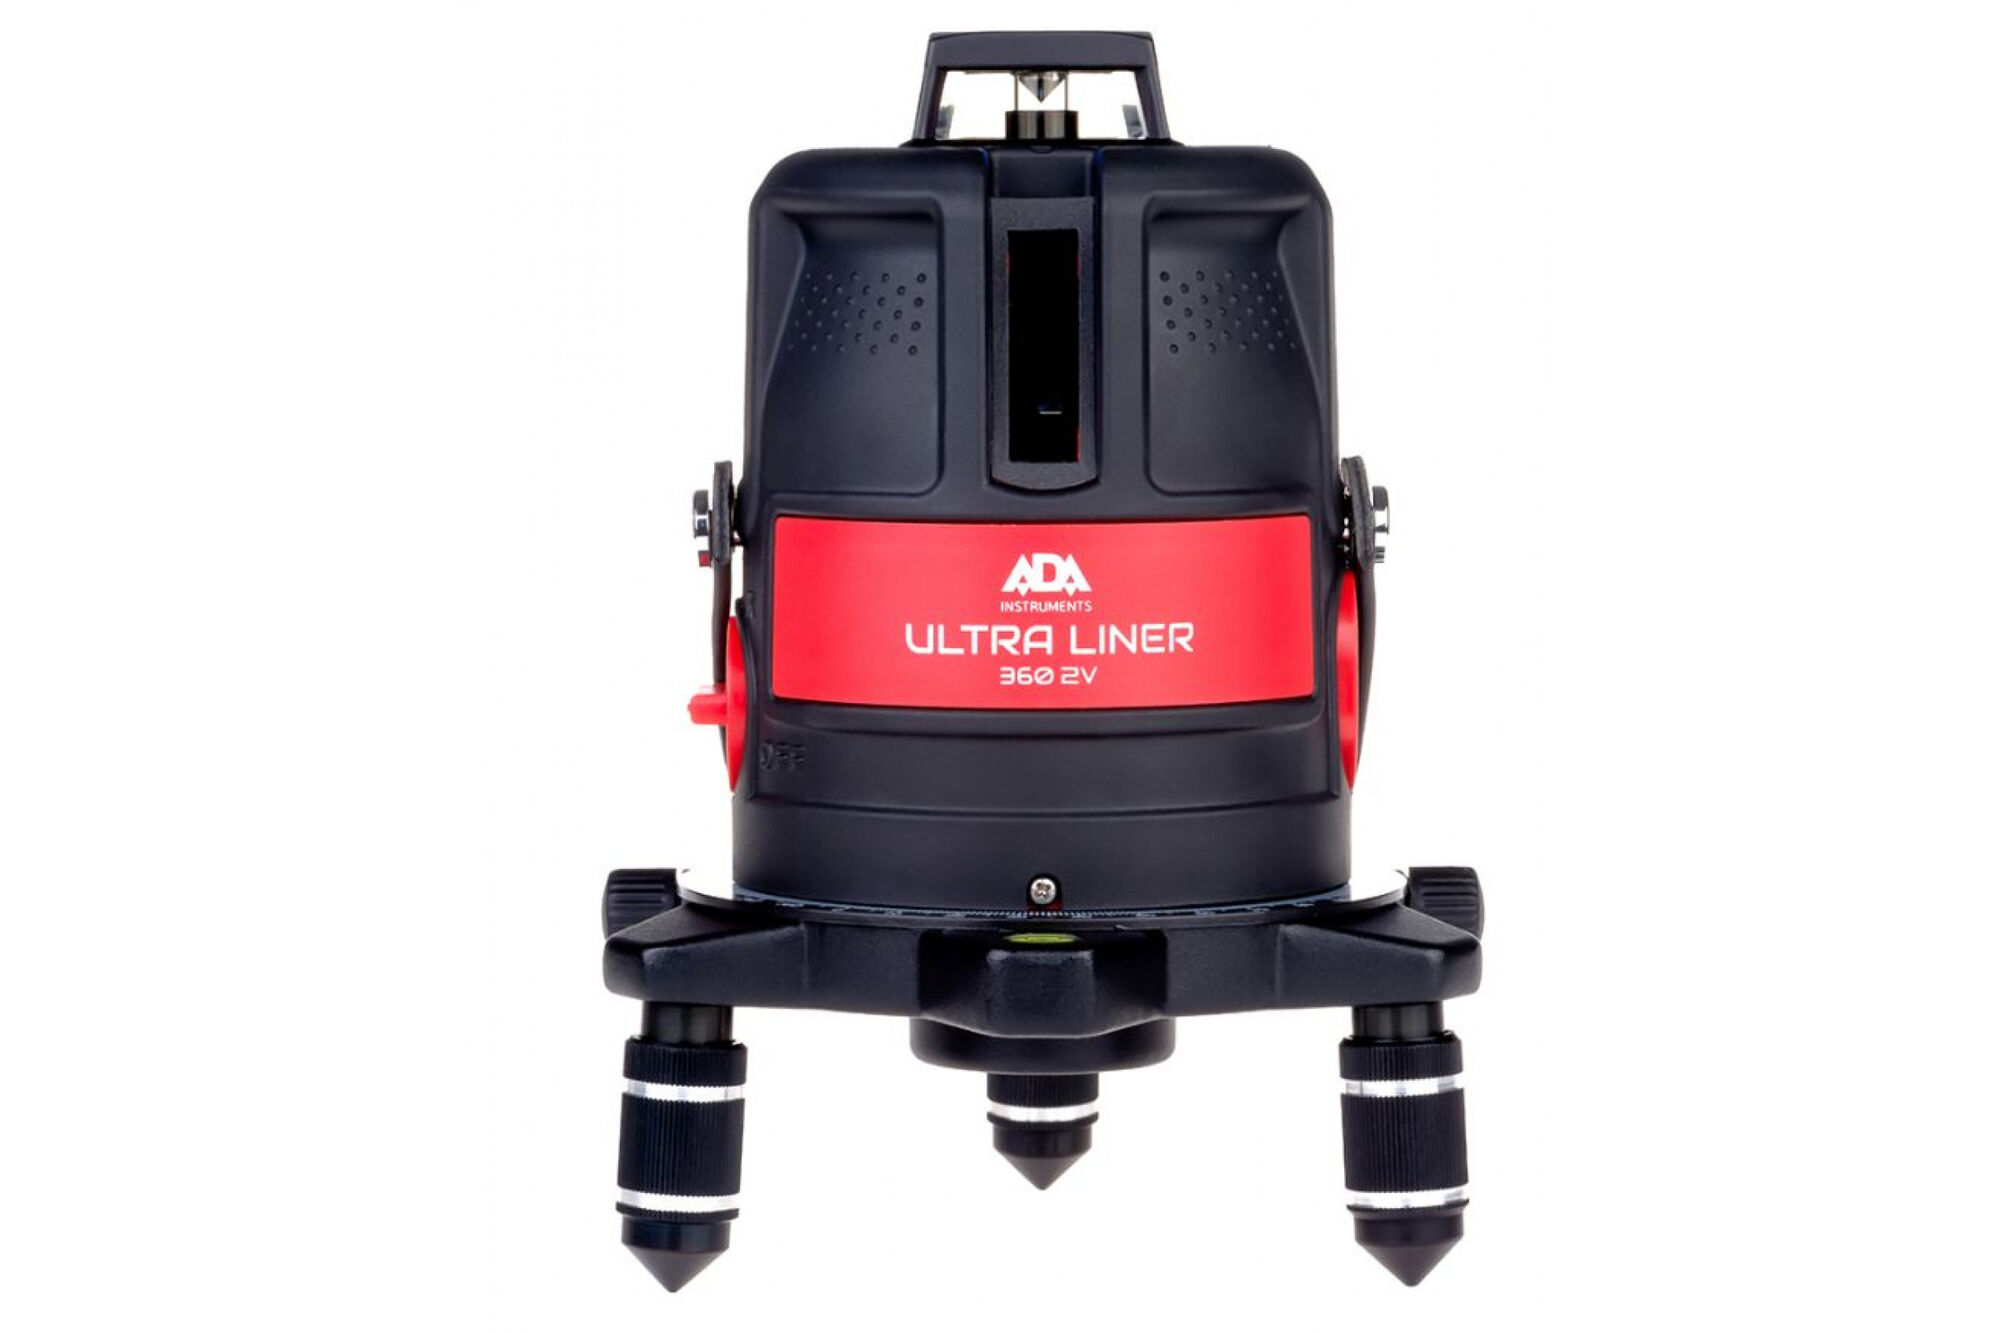 Лазерный уровень ADA ULTRALINER 360 2 V А00467